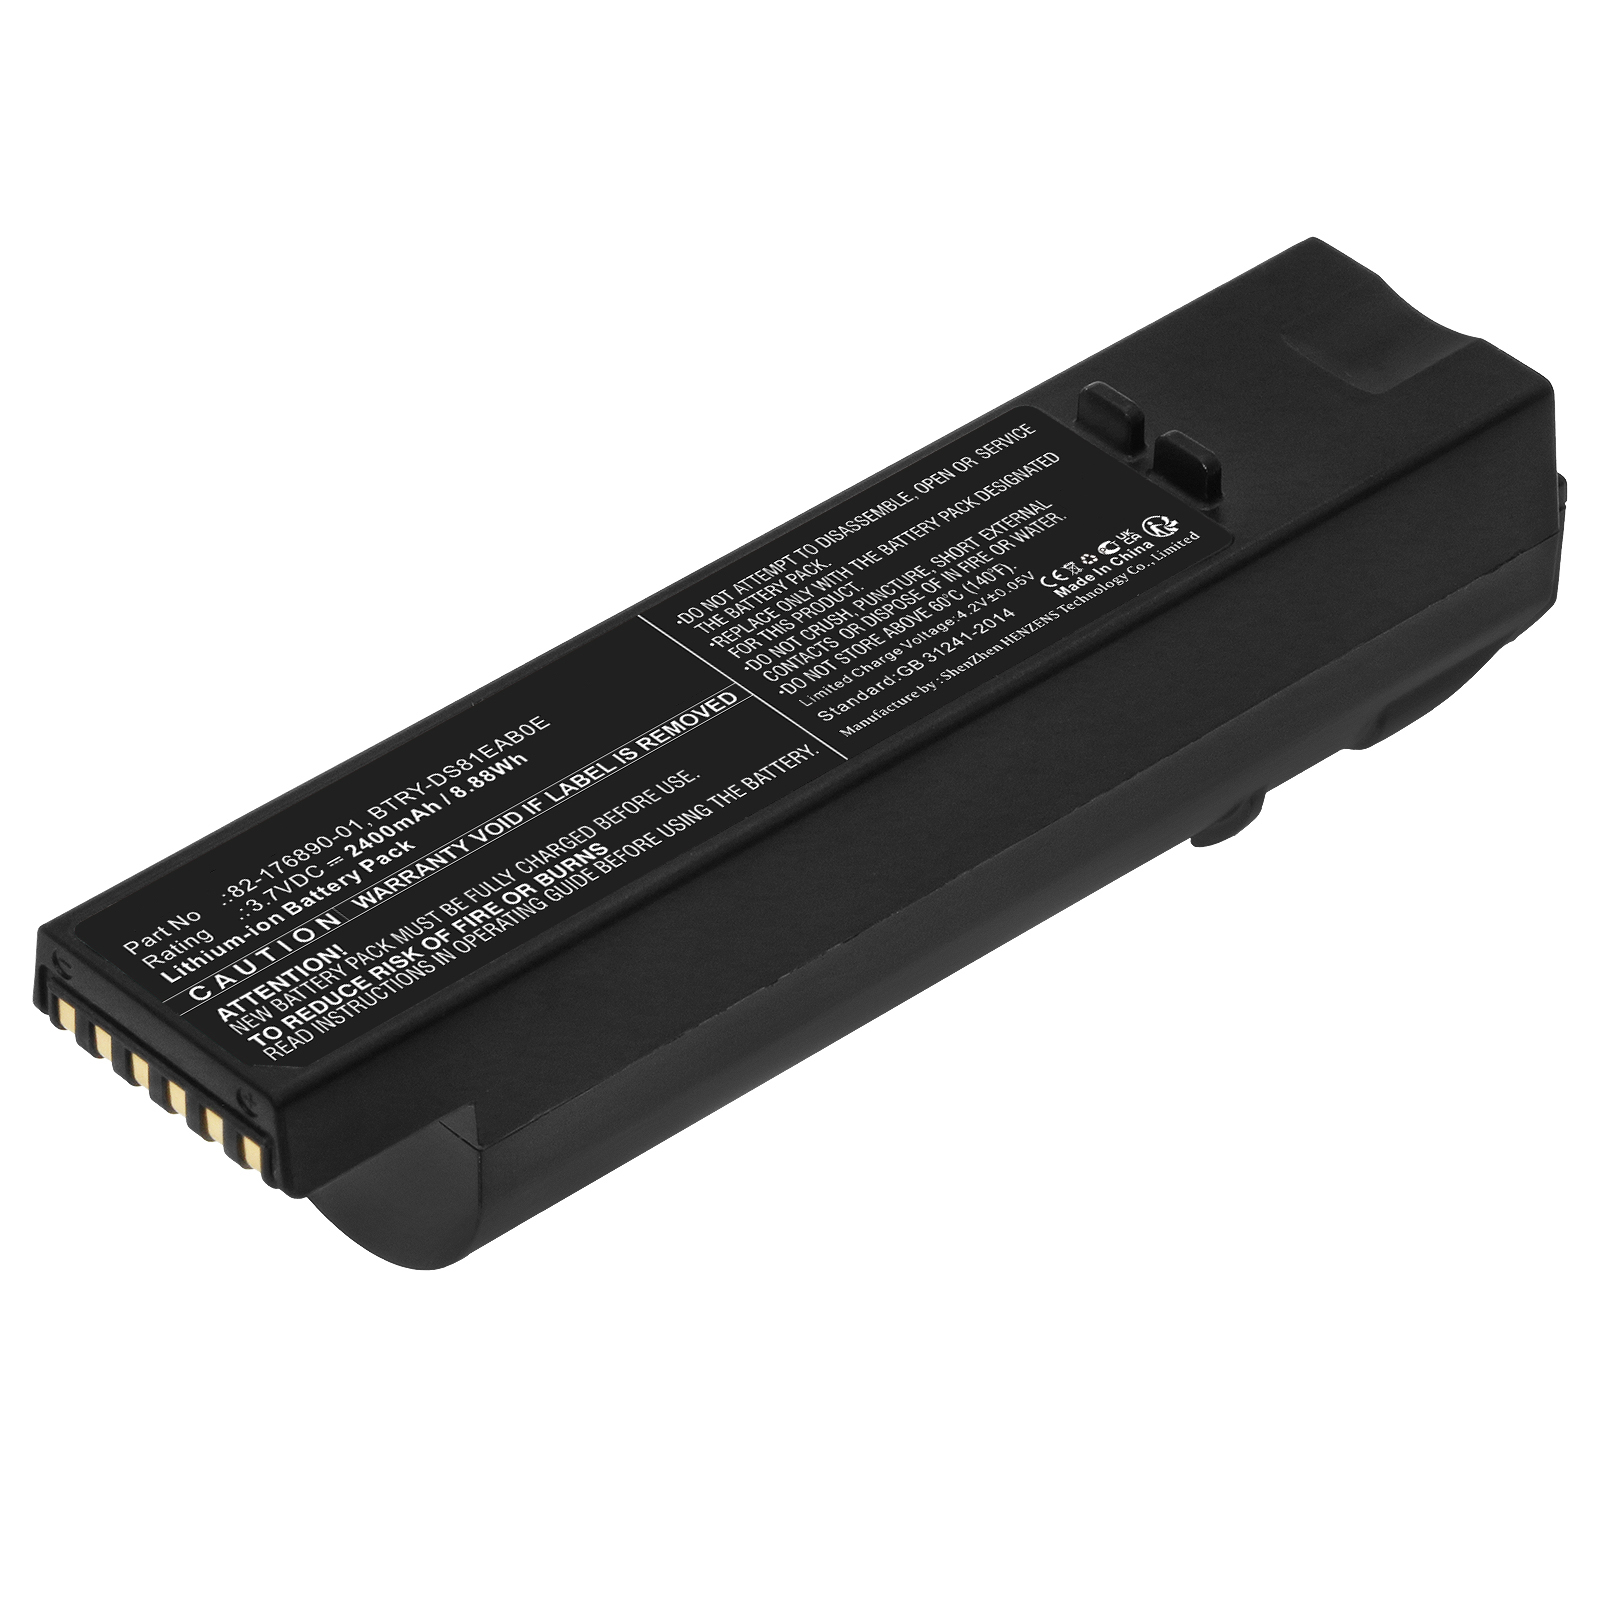 Synergy Digital Barcode Scanner Battery, Compatible with Zebra 82-176890-01 Barcode Scanner Battery (Li-ion, 3.7V, 2400mAh)